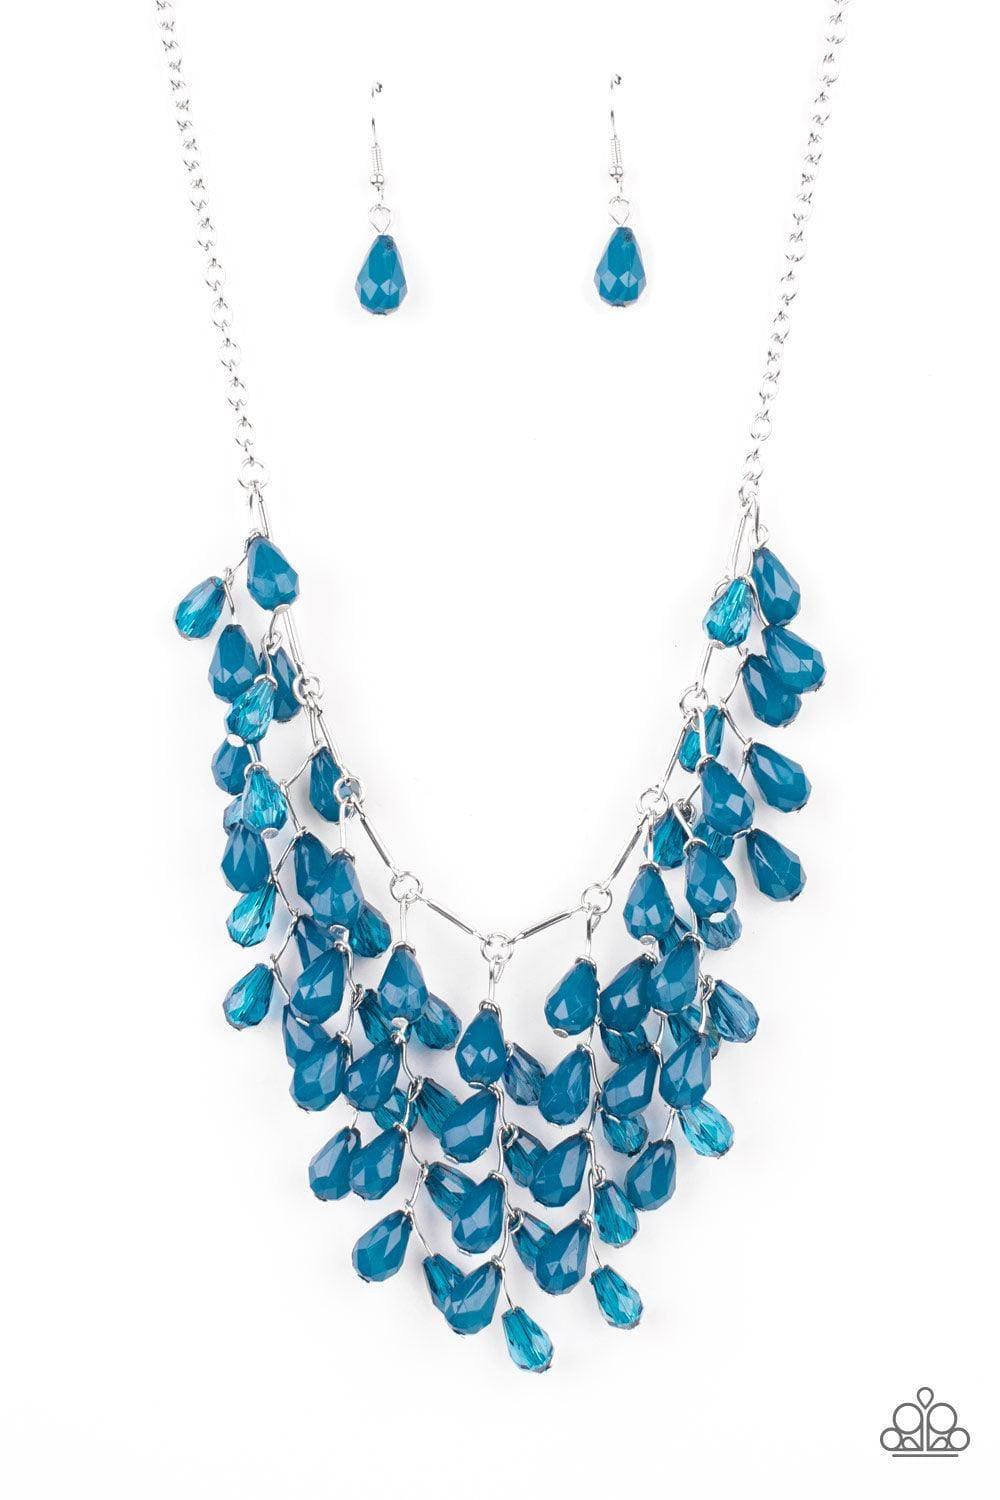 Paparazzi Accessories - Garden Fairytale - Blue Necklace - Bling by JessieK